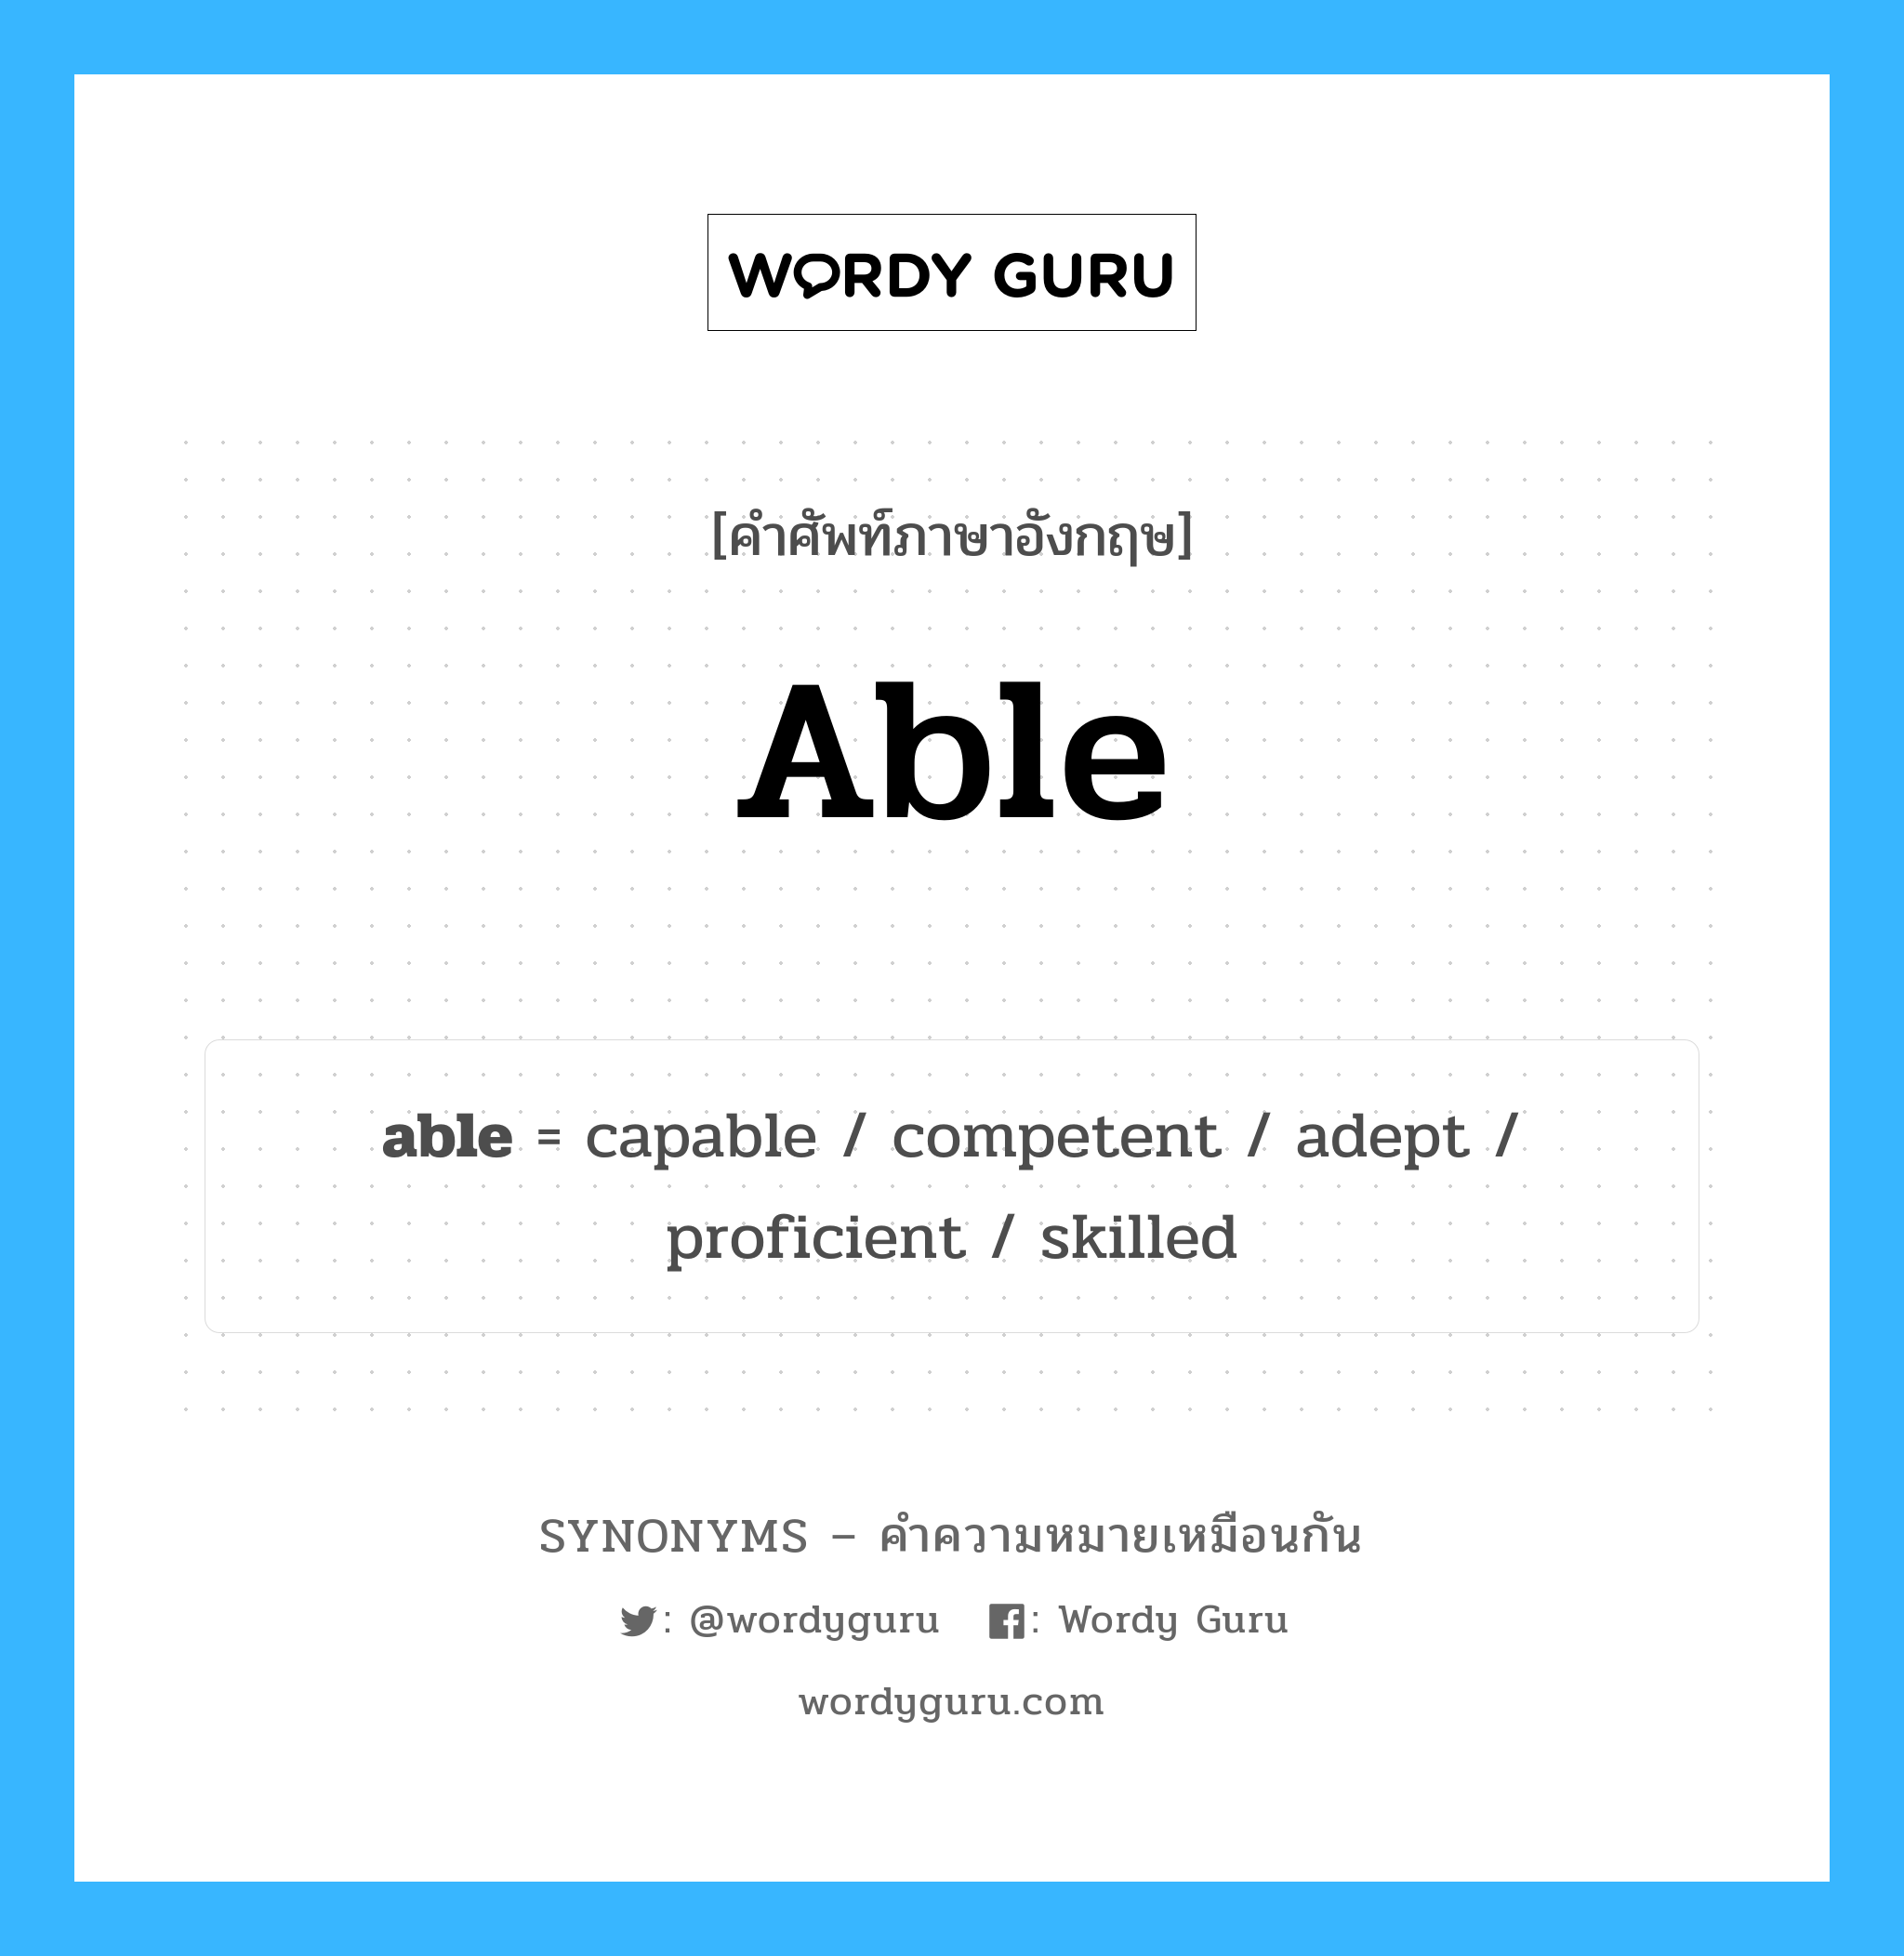 proficient เป็นหนึ่งใน able และมีคำอื่น ๆ อีกดังนี้, คำศัพท์ภาษาอังกฤษ proficient ความหมายคล้ายกันกับ able แปลว่า มีความเชี่ยวชาญ หมวด able